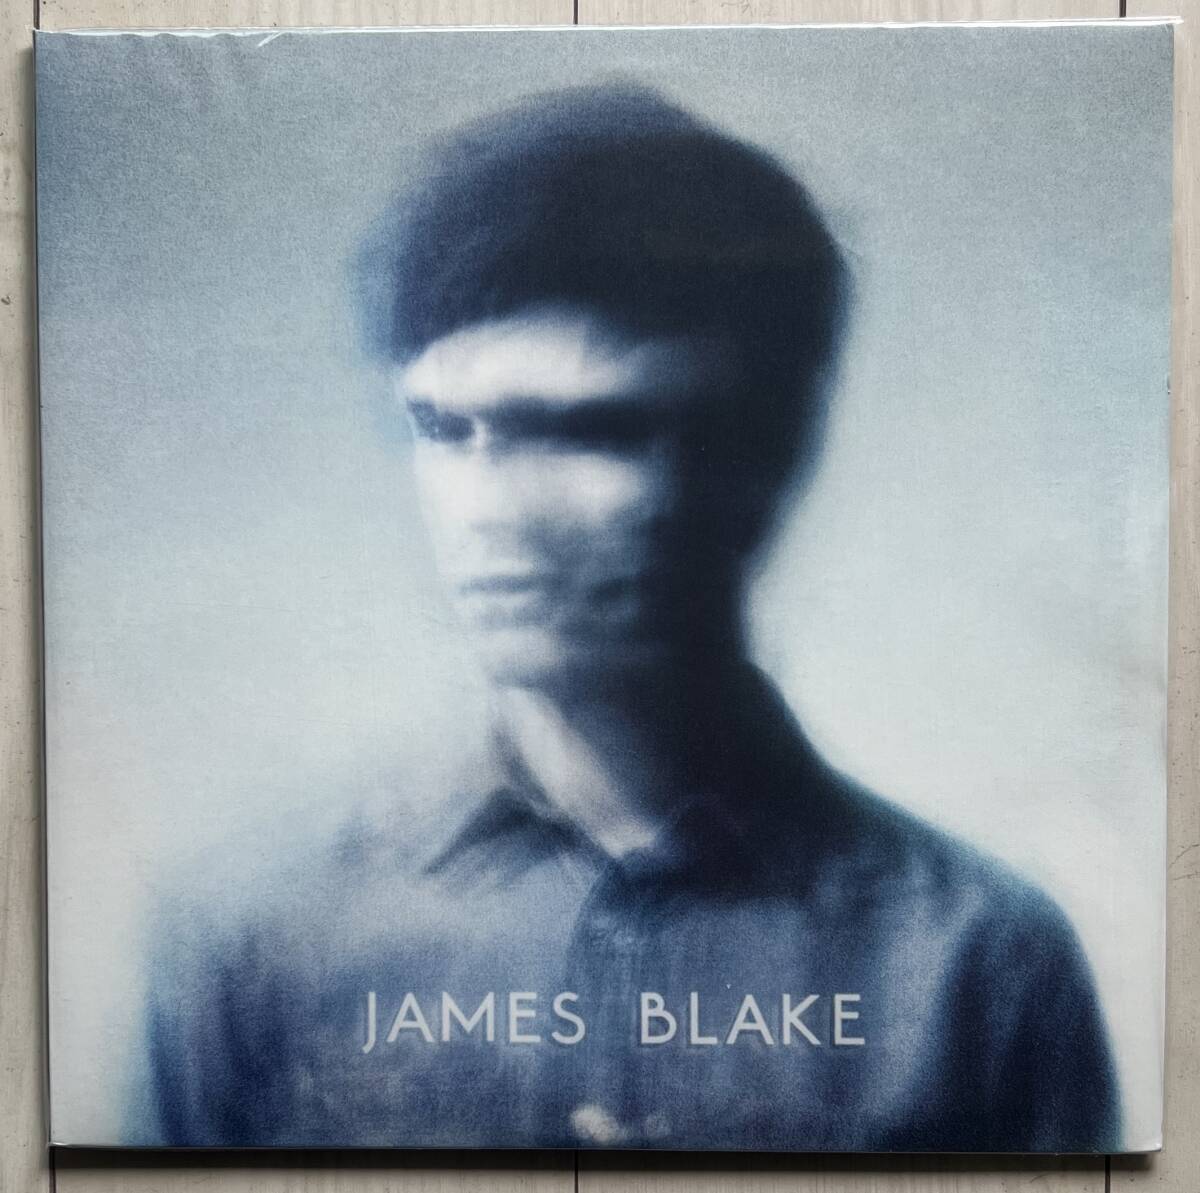 【UK盤オリジalbum】James Blake James Blake ジェイムス・ブレイク Ambient, Dubstep, Experimental _画像1